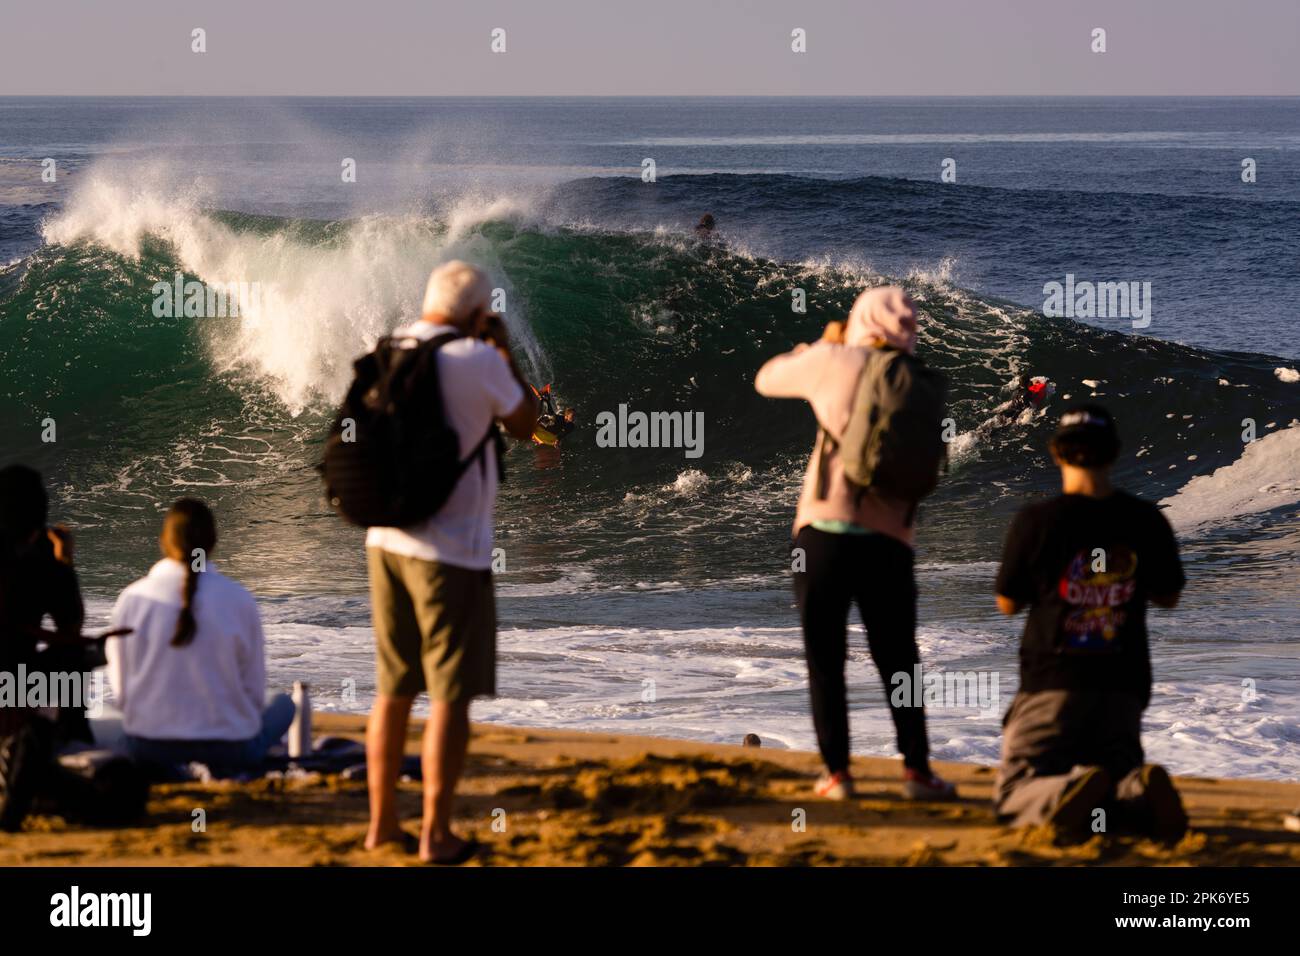 People taking photos on beach, Newport Beach, California, USA Stock Photo